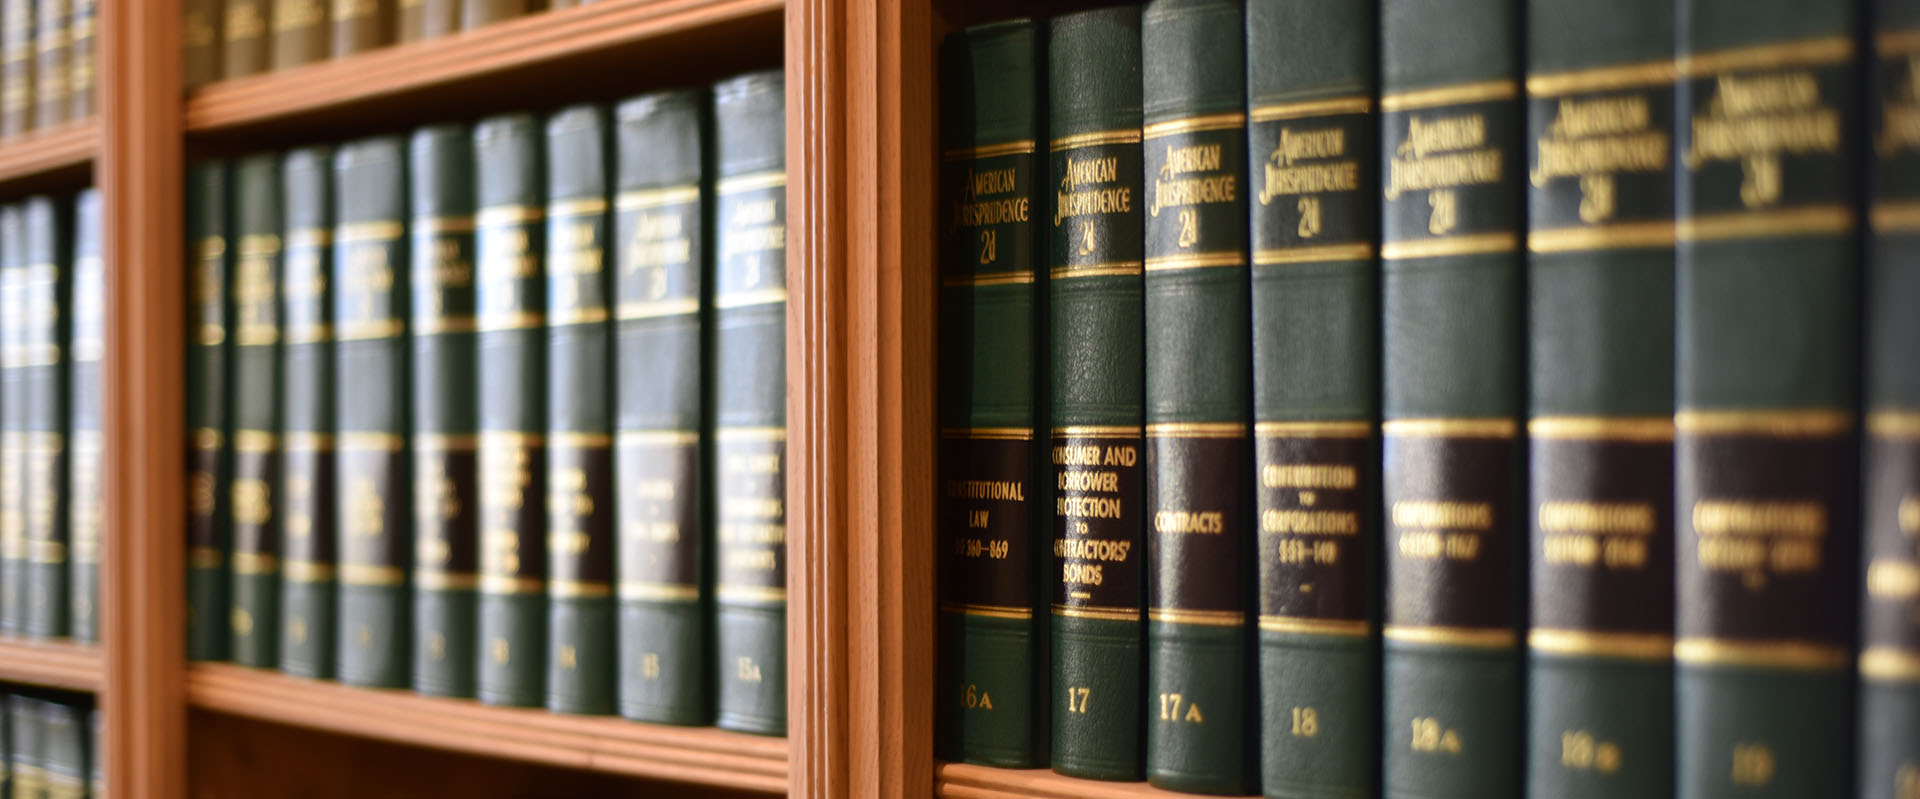 Law books on a bookshelf